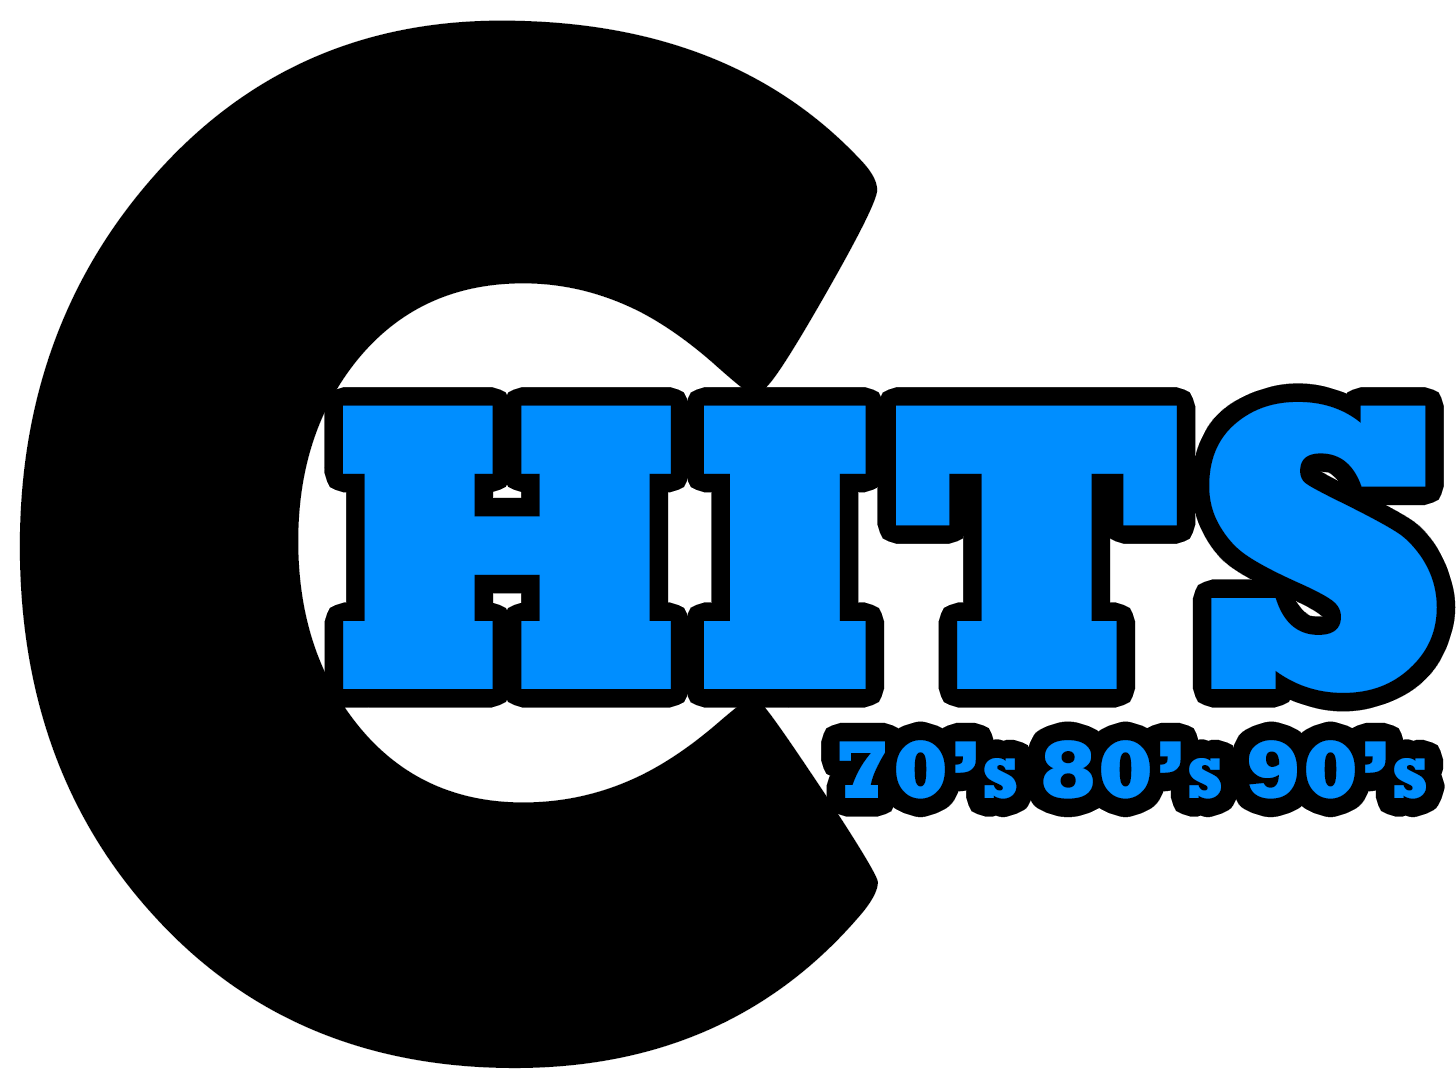 70's, 80's, 90's Contemporary Christian Music - Internet Radio (1500x1500)